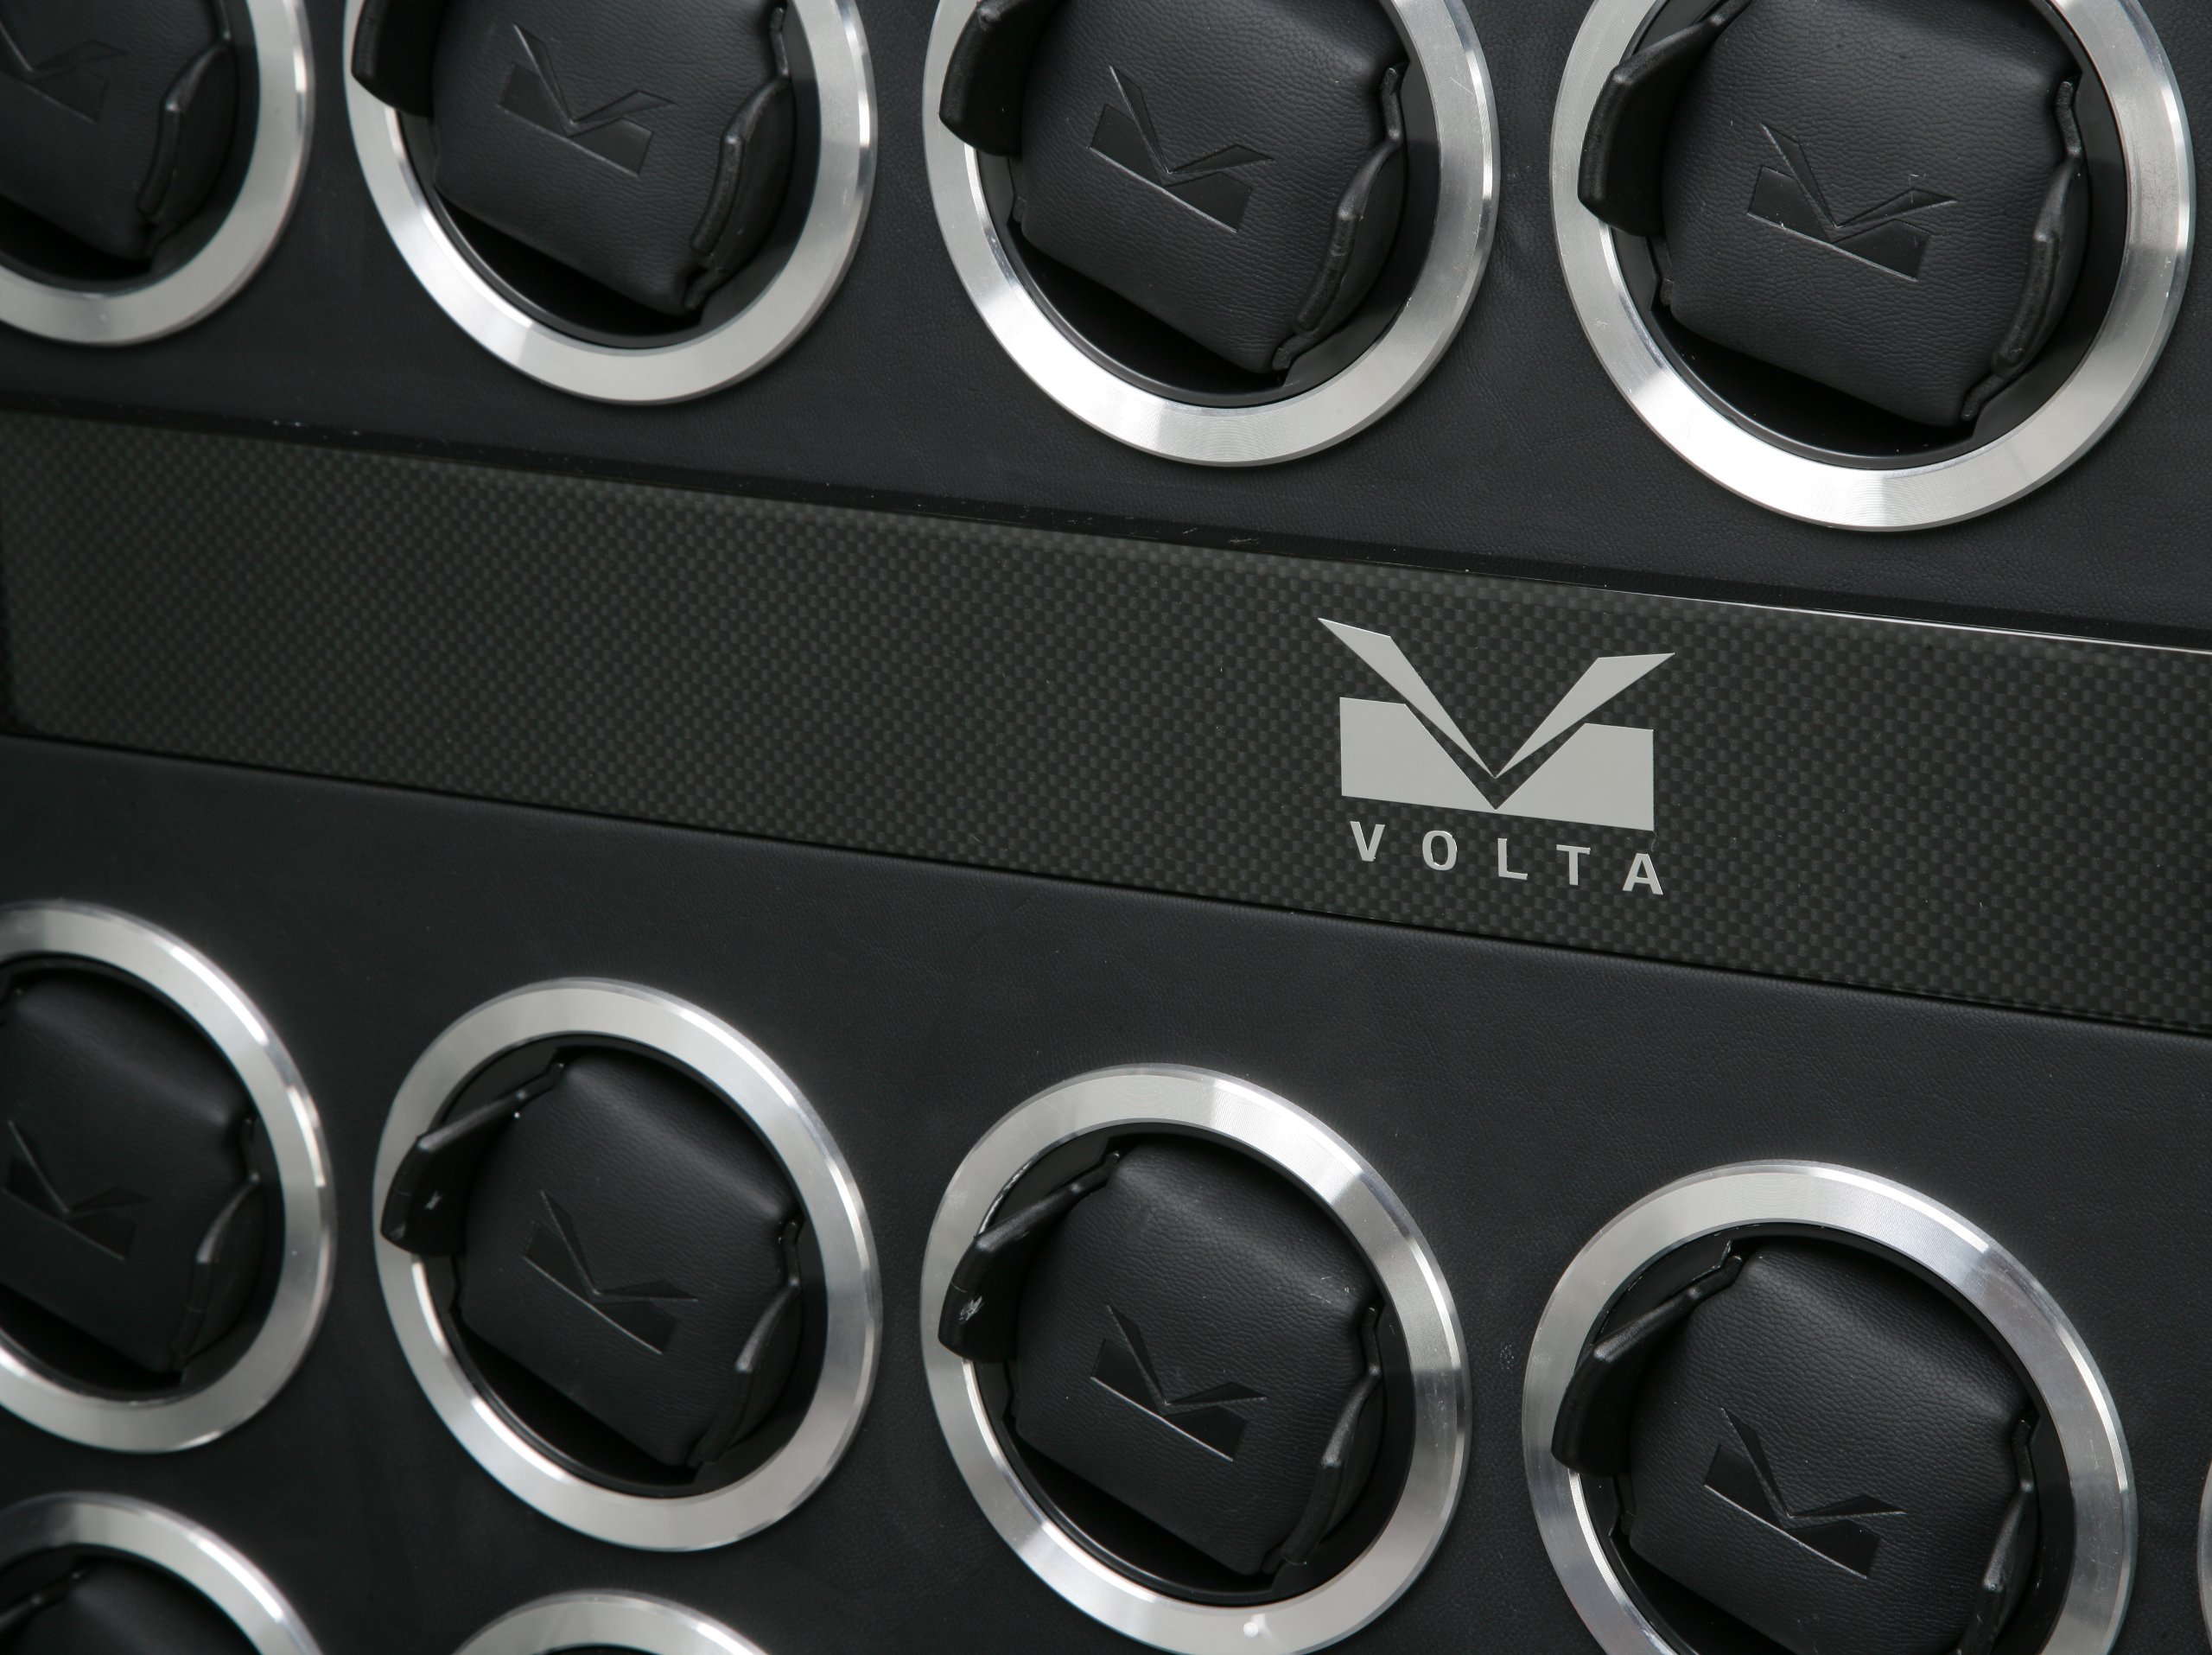 Volta 31-560240 Signature Series Twenty-Four (24) Carbon Fiber Watch Winder